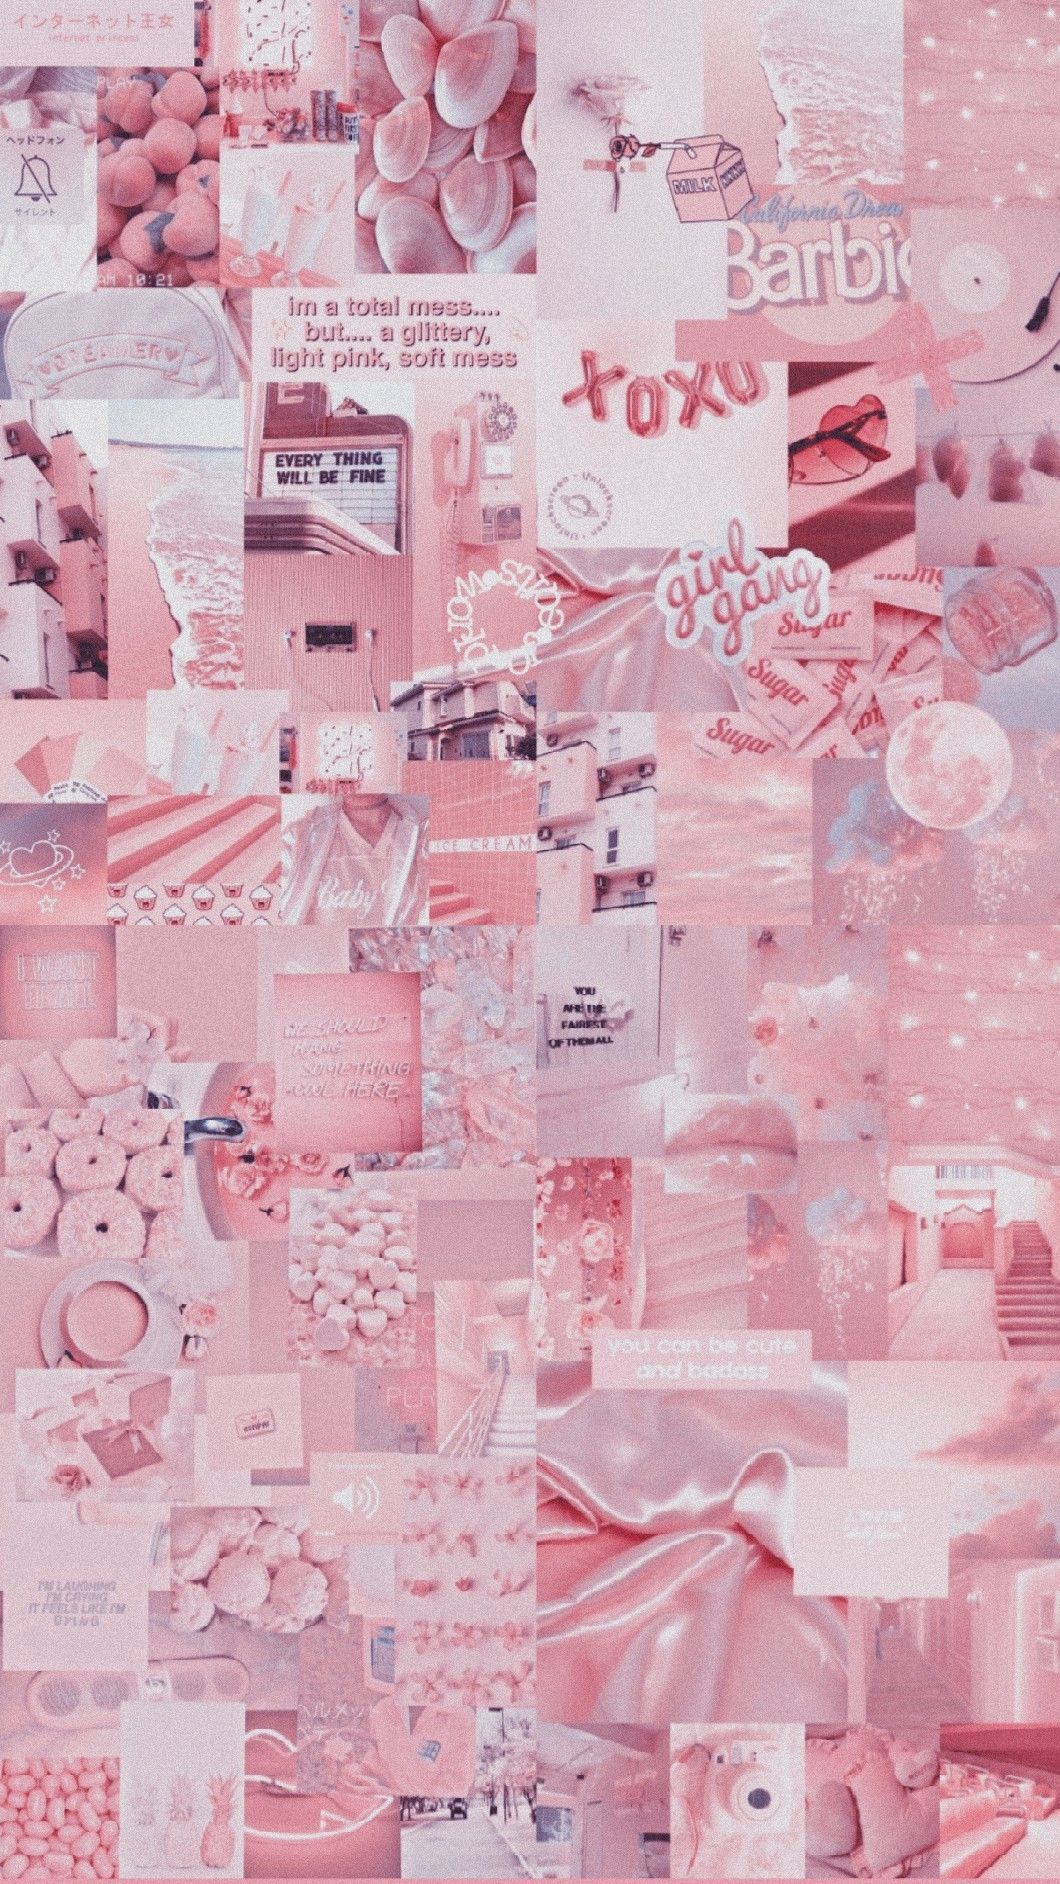 Aesthetic iphone wallpaper. Aesthetic pastel wallpaper, Aesthetic iphone wallpaper, Pink wallpaper iphone